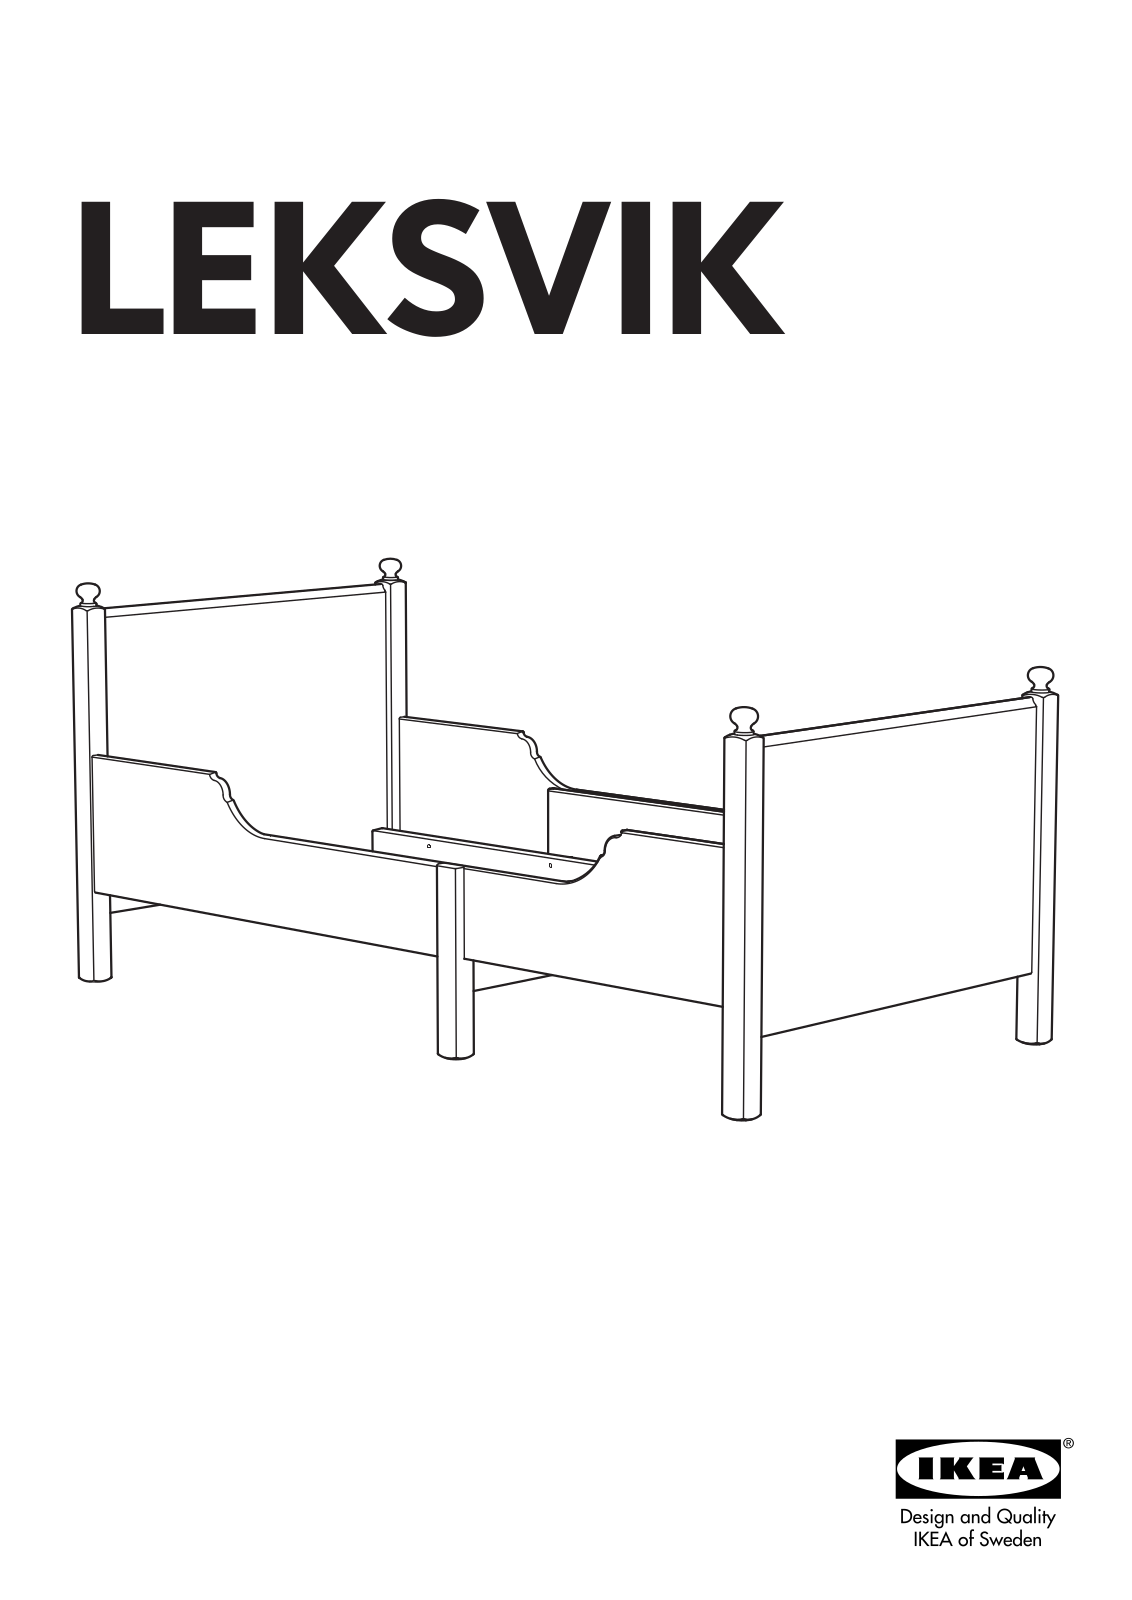 IKEA LEKSVIK EXTENDABLE BED FRAME 38X75 Assembly Instruction